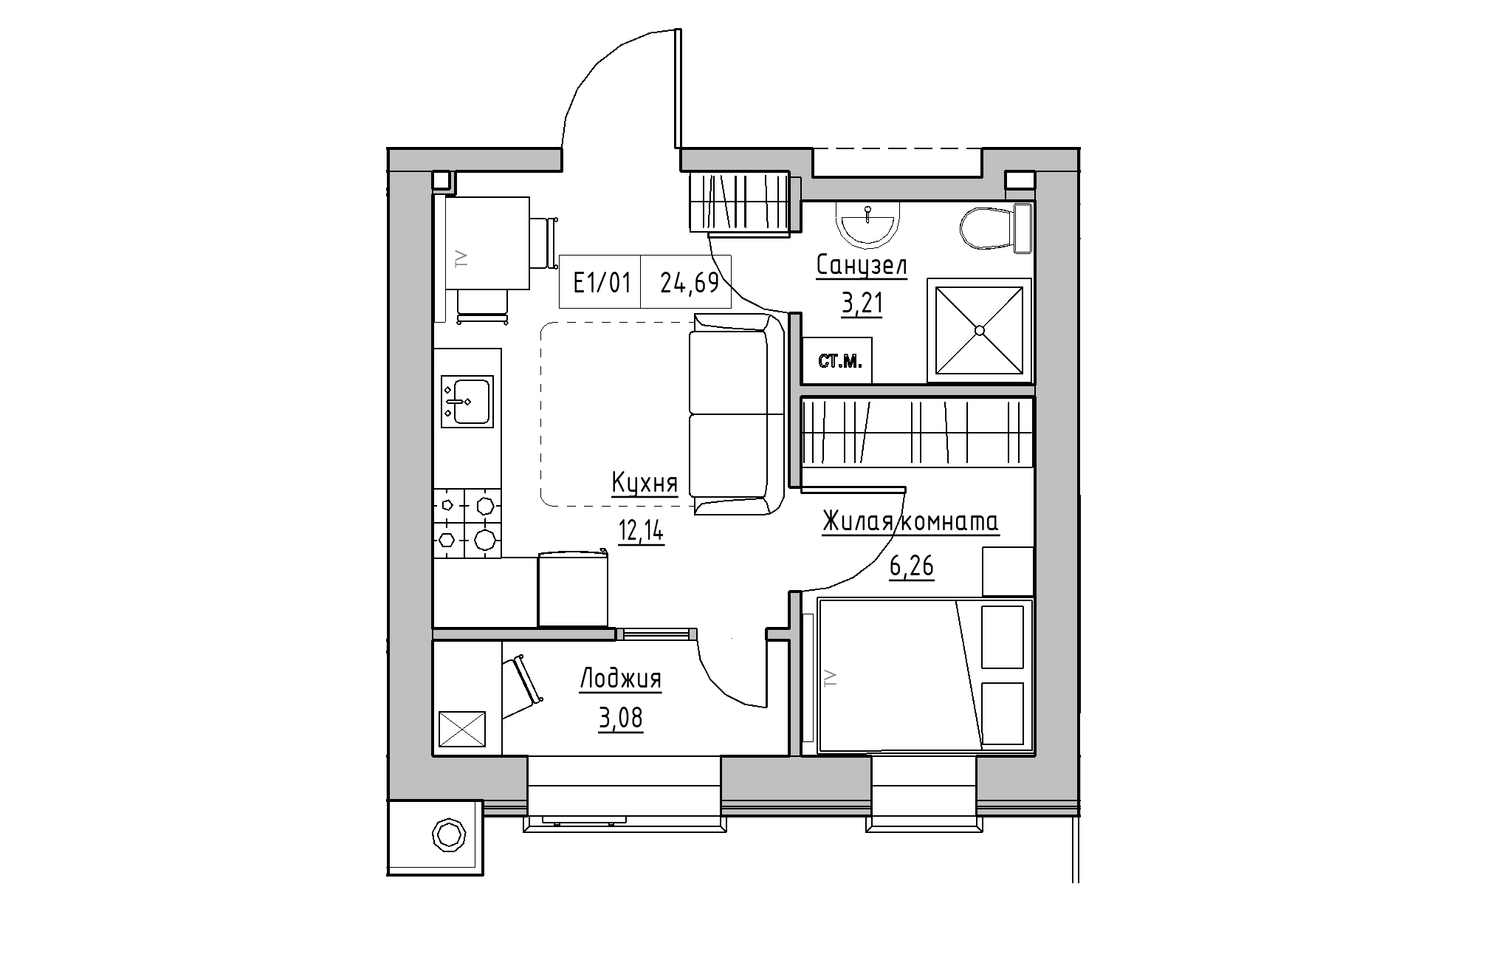 Planning 1-rm flats area 24.69m2, KS-013-02/0012.